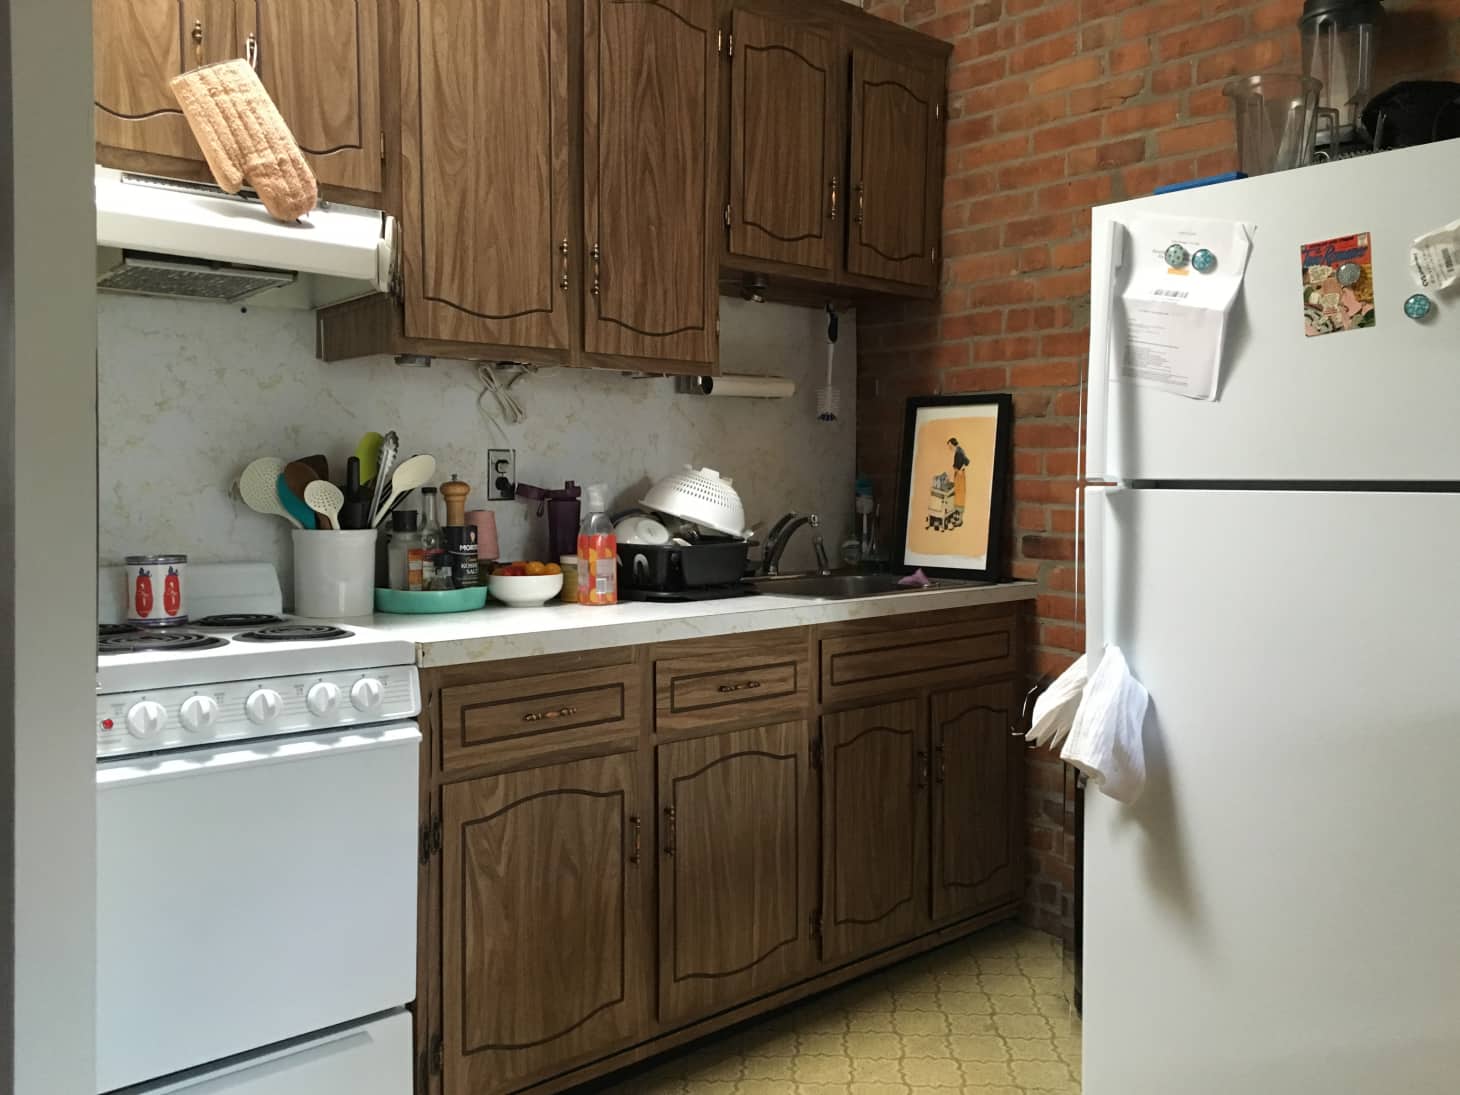 Taras Budget Rental Remodel Rental Kitchen Design Options With A